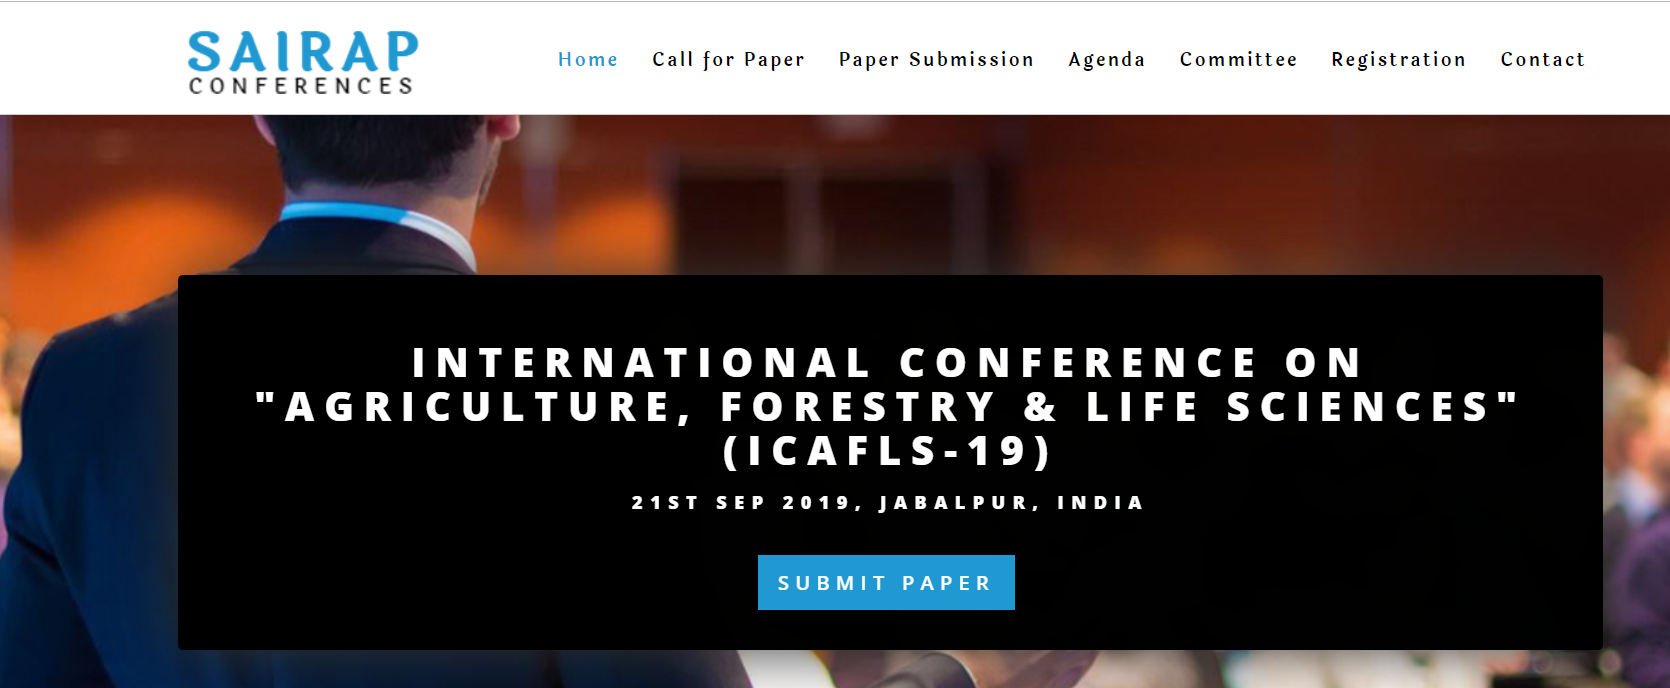 INTERNATIONAL CONFERENCE ON "AGRICULTURE, FORESTRY & LIFE SCIENCES" (ICAFLS-19), Jabalpur, Madhya Pradesh, India